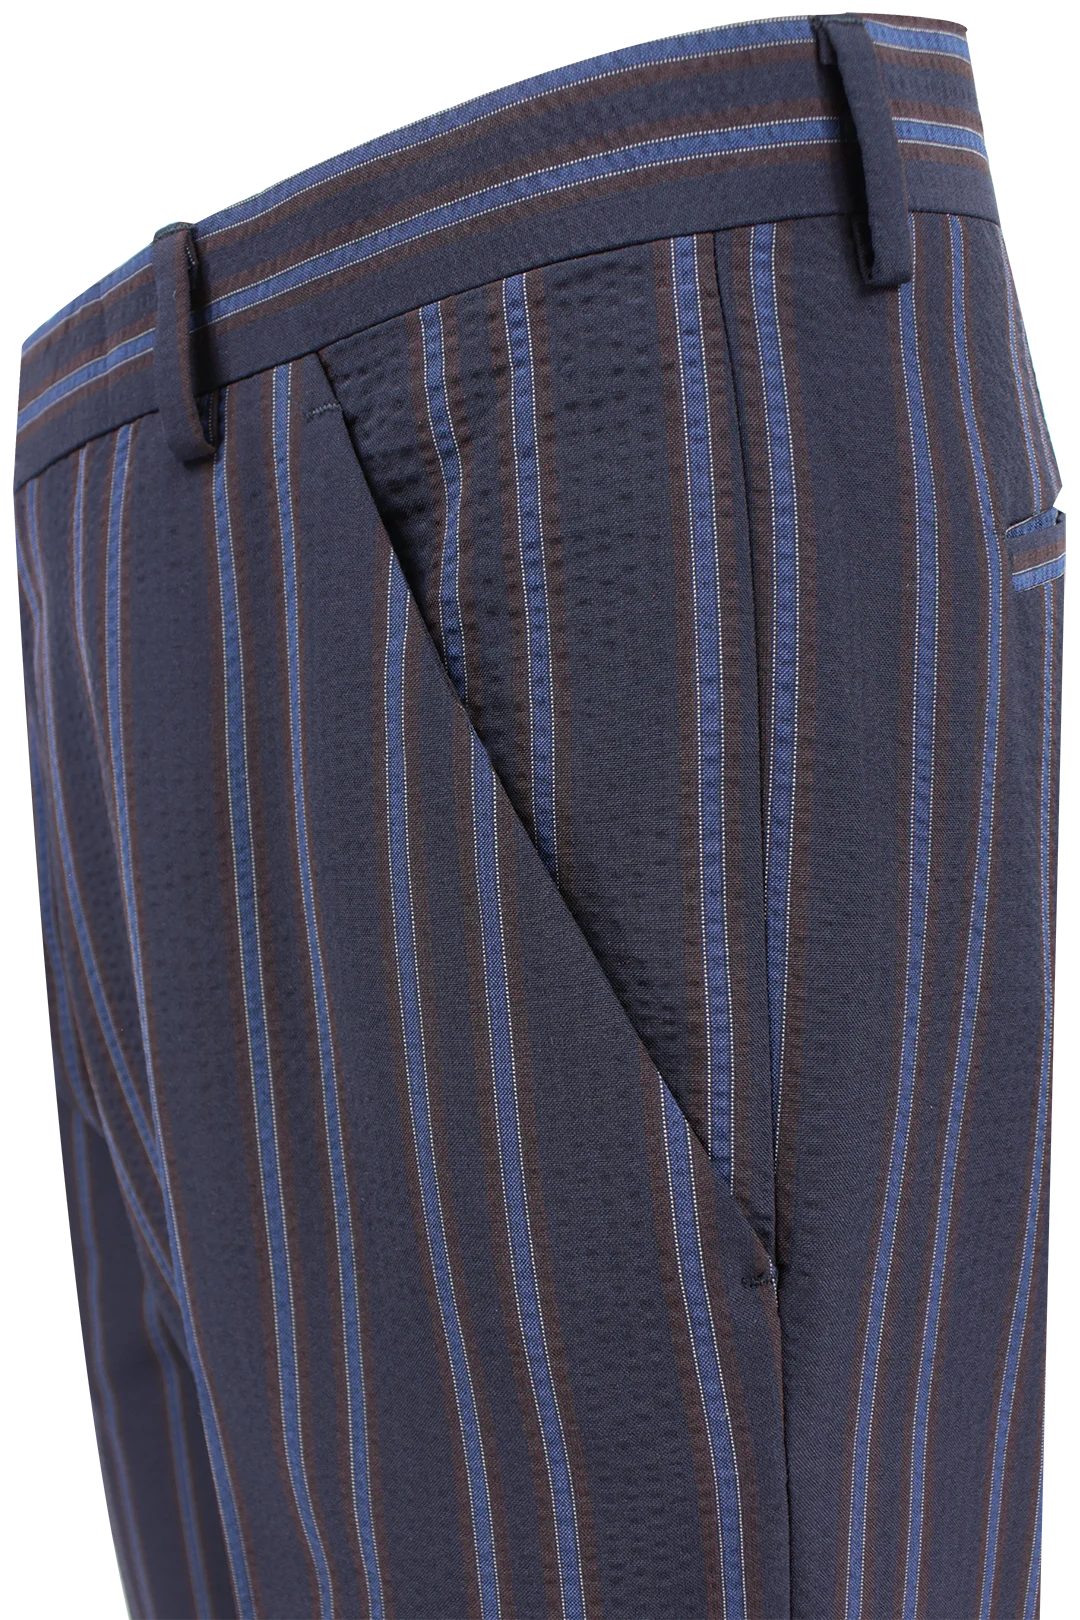 Pantalone Japan lana seersucker righe blu tasca